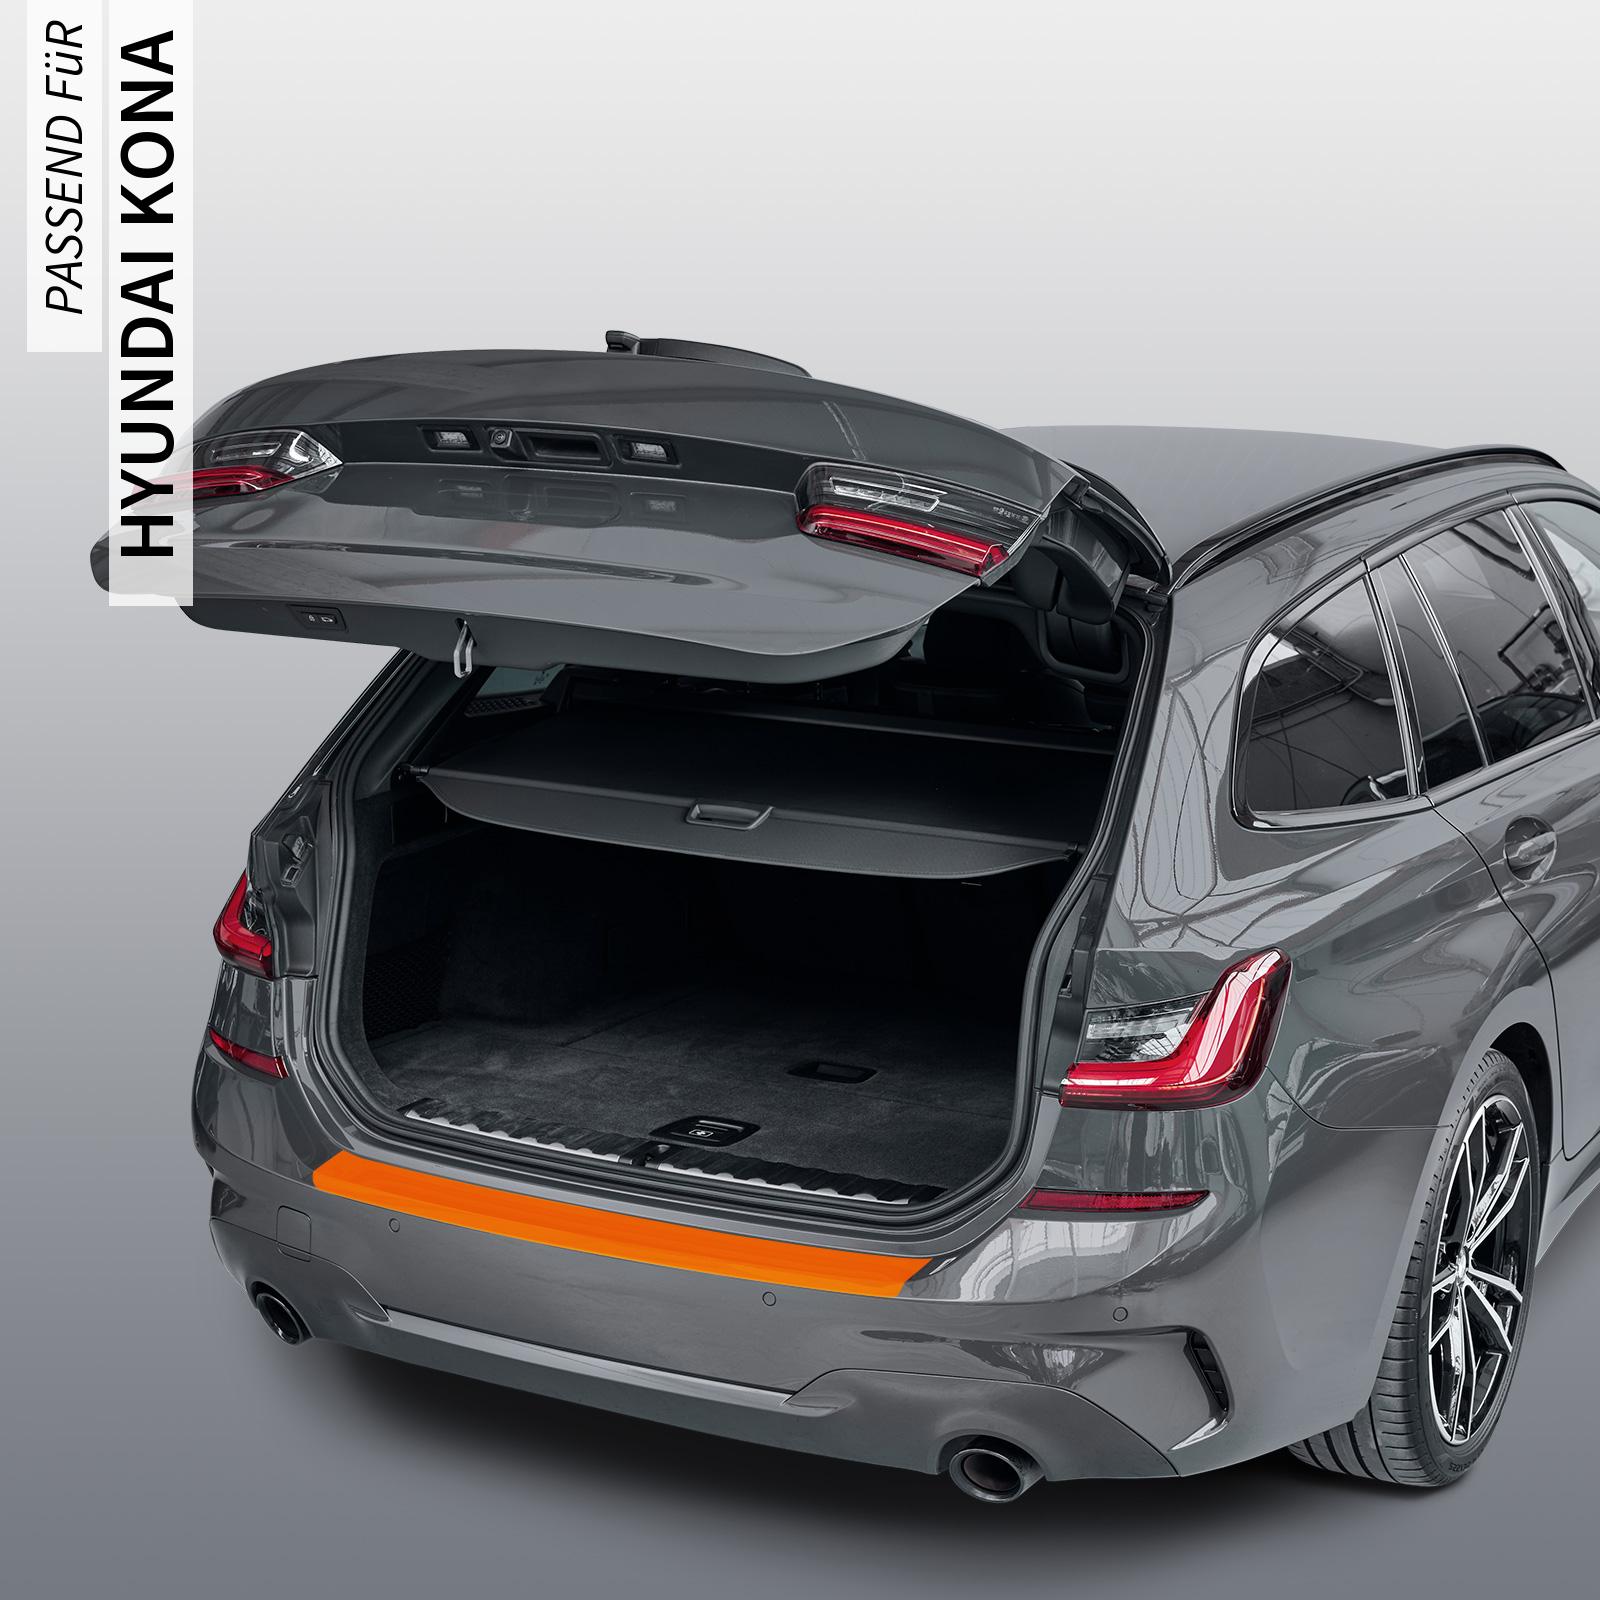 Ladekantenschutzfolie - Transparent Glatt MATT 110 µm stark  für Hyundai Kona Hybrid, Facelift, ab BJ 11/2020